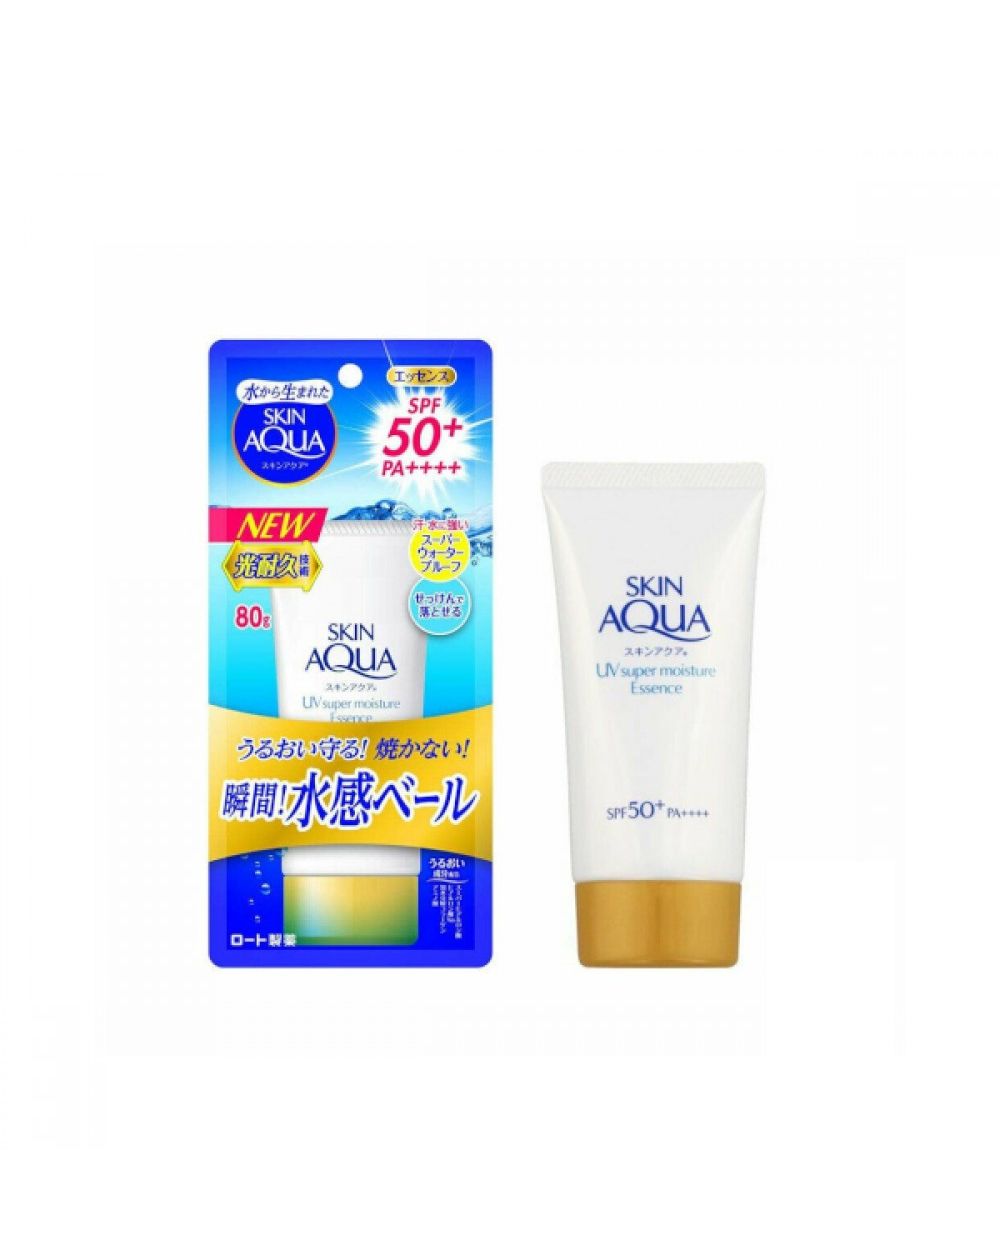 Rohto Mentholatum - Skin Aqua Super Moisture Essence SPF50+ PA++++